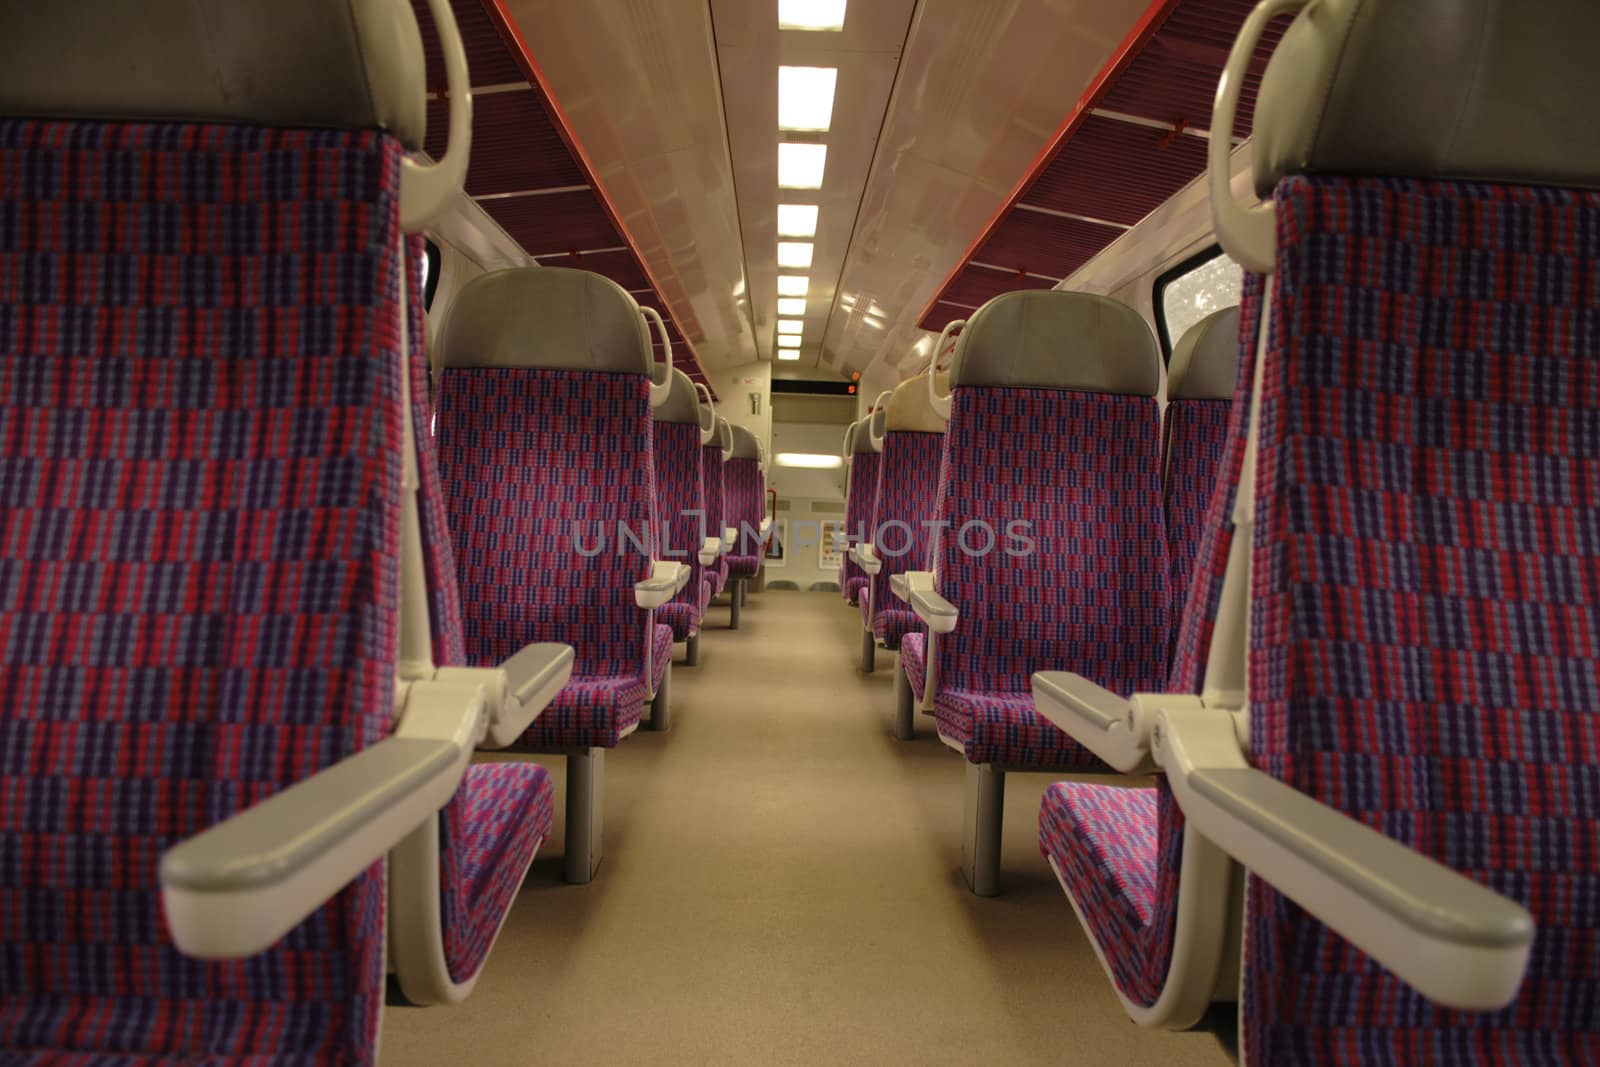 interior of train by jonnysek